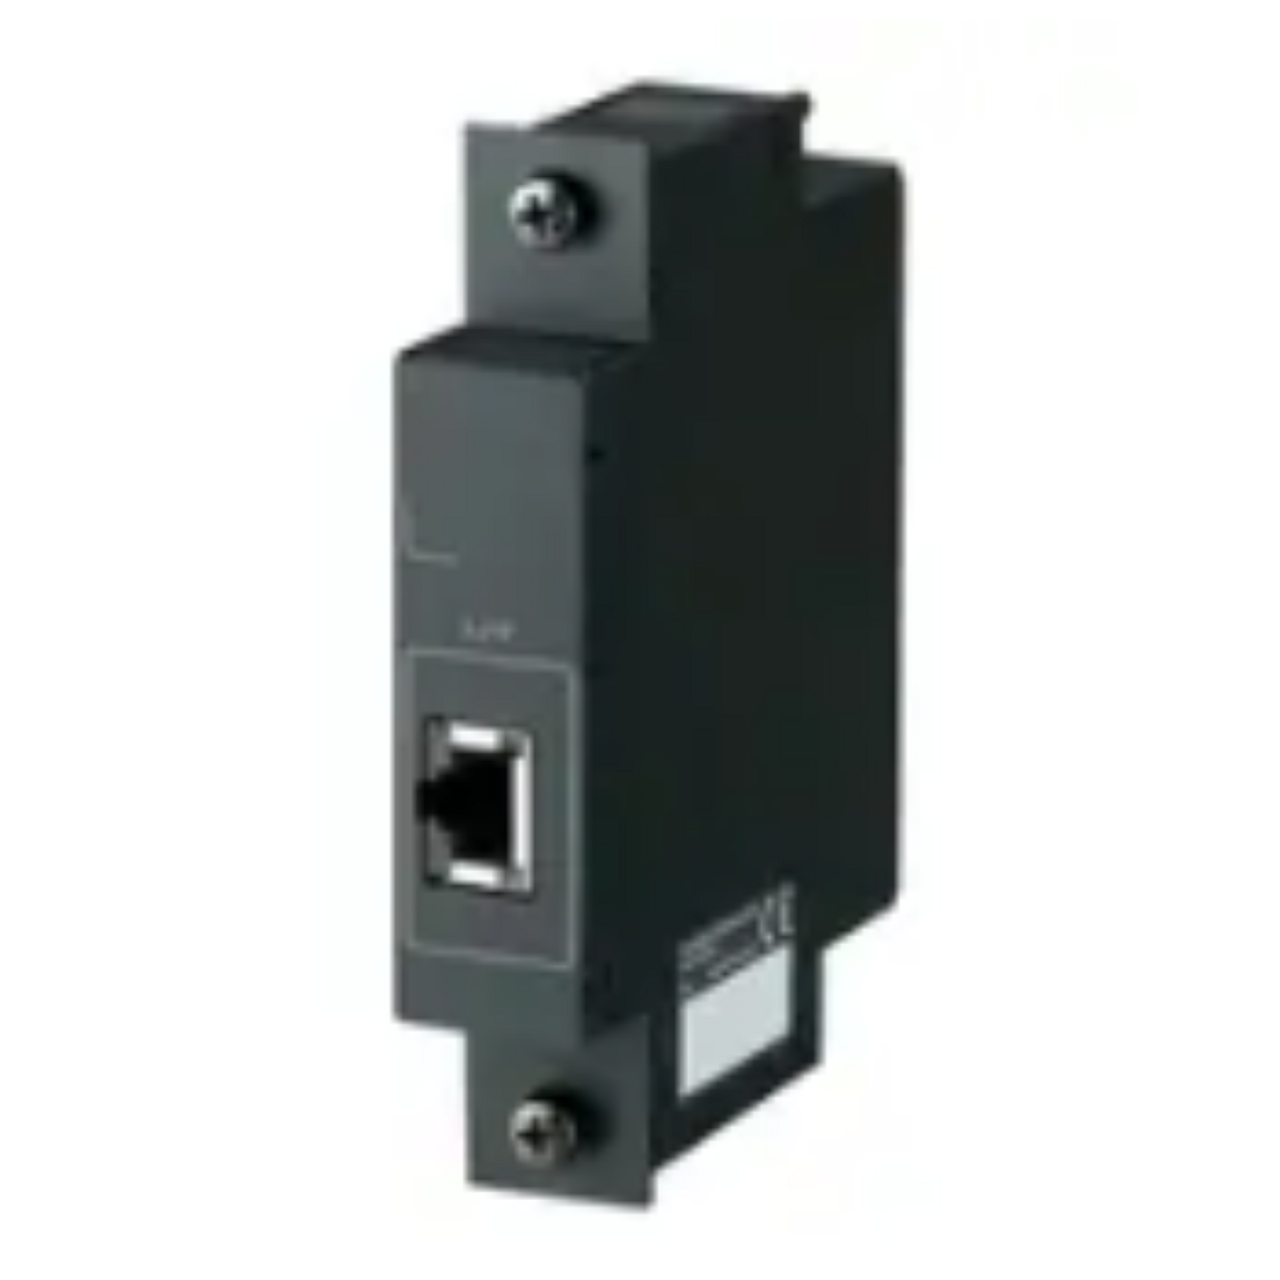 Keyence CA-EC80LJ High-Speed 2D Laser Profiler, LJ-V Series Input Unit [New]